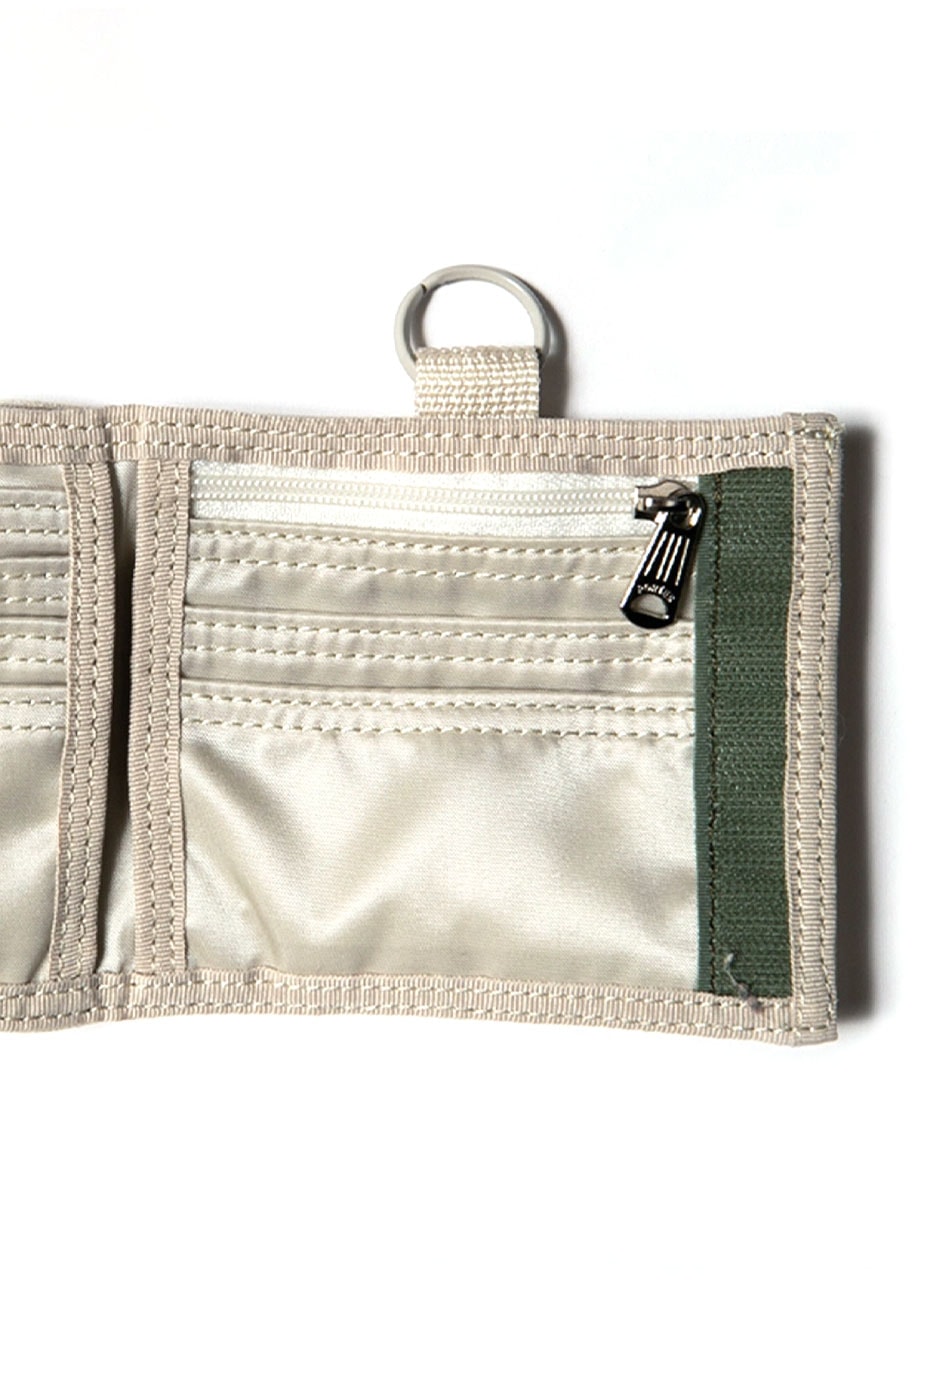 One Block Down Porter Yoshida Co Hazy Smoky Night bags Key case Tote Bag Wallet Bonsac white nylon release info price date campaign lookbook